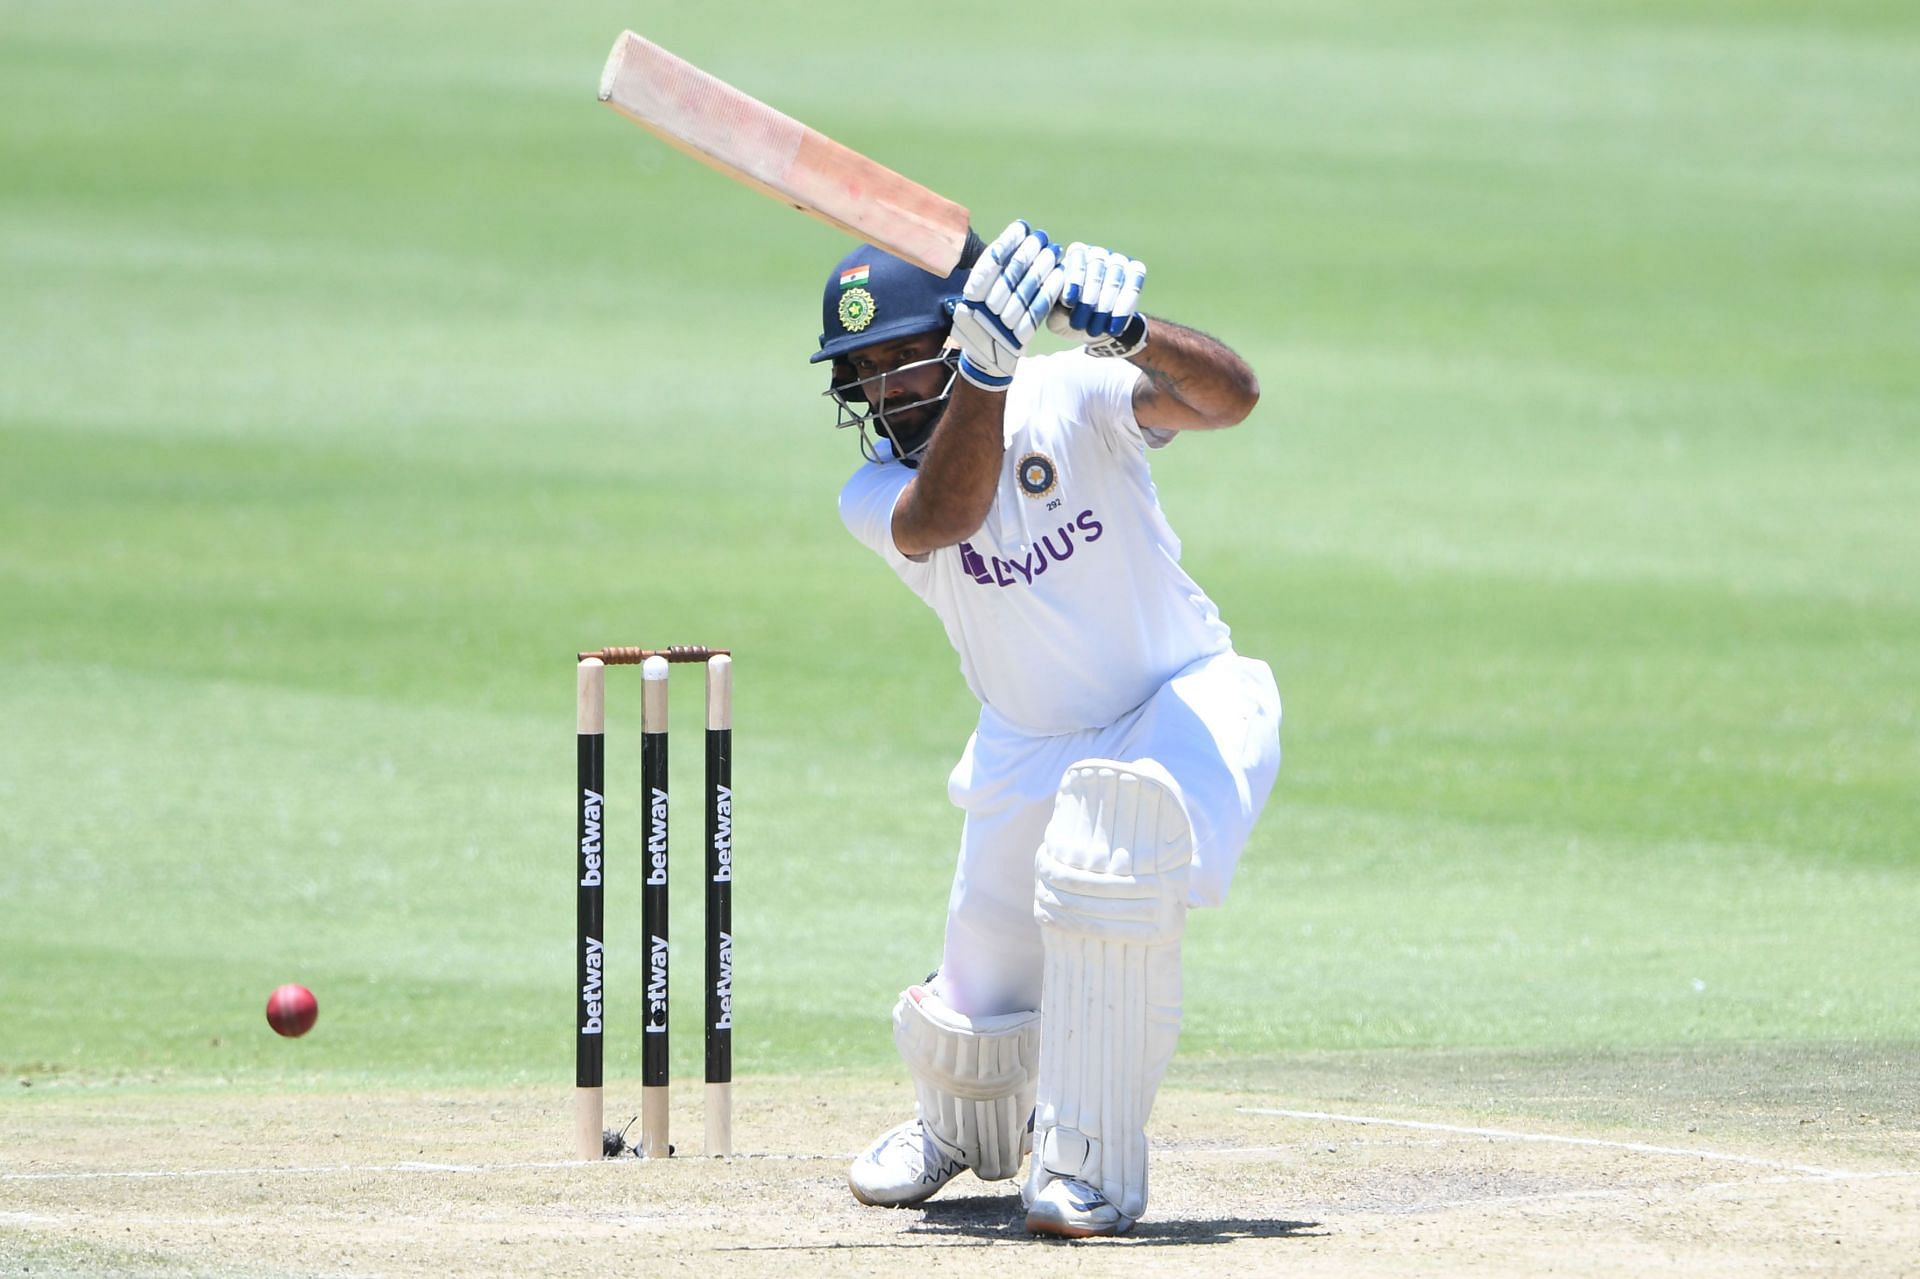 Hanuma Vihari has looked solid at the crease so far against Sri Lanka